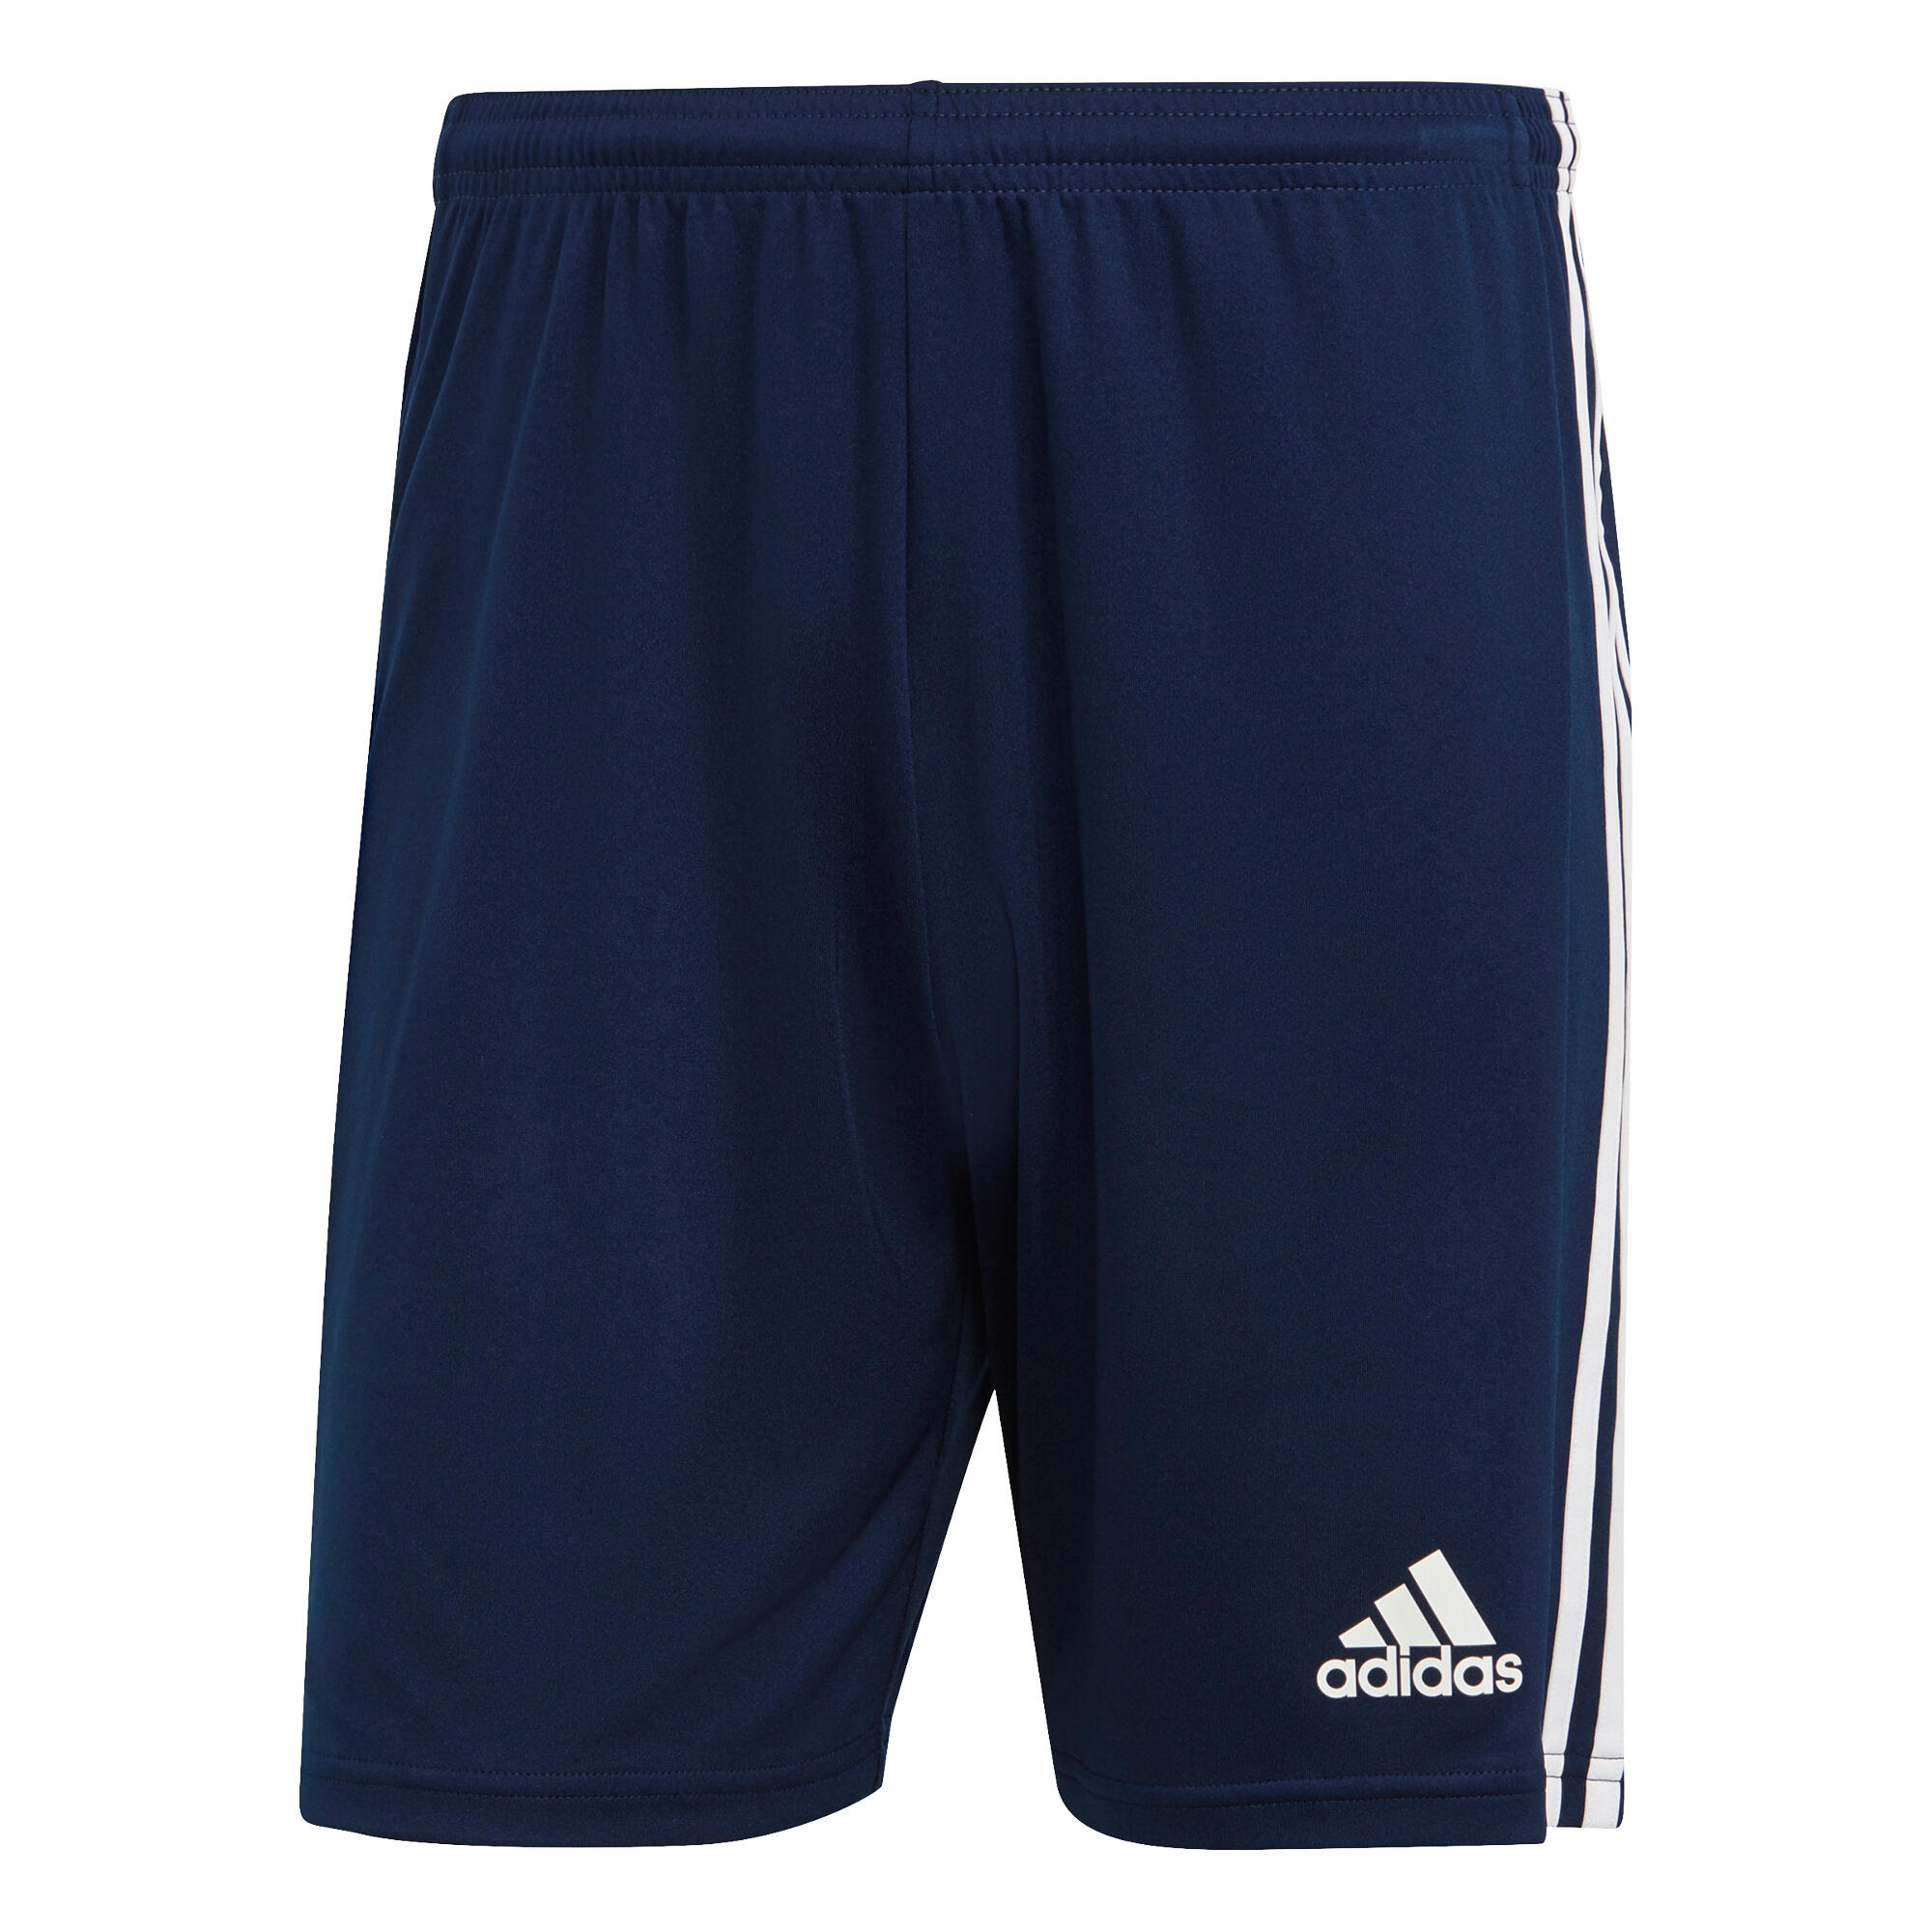 Decathlon | Pantaloncini calcio uomo SQUADRA blu |  Adidas